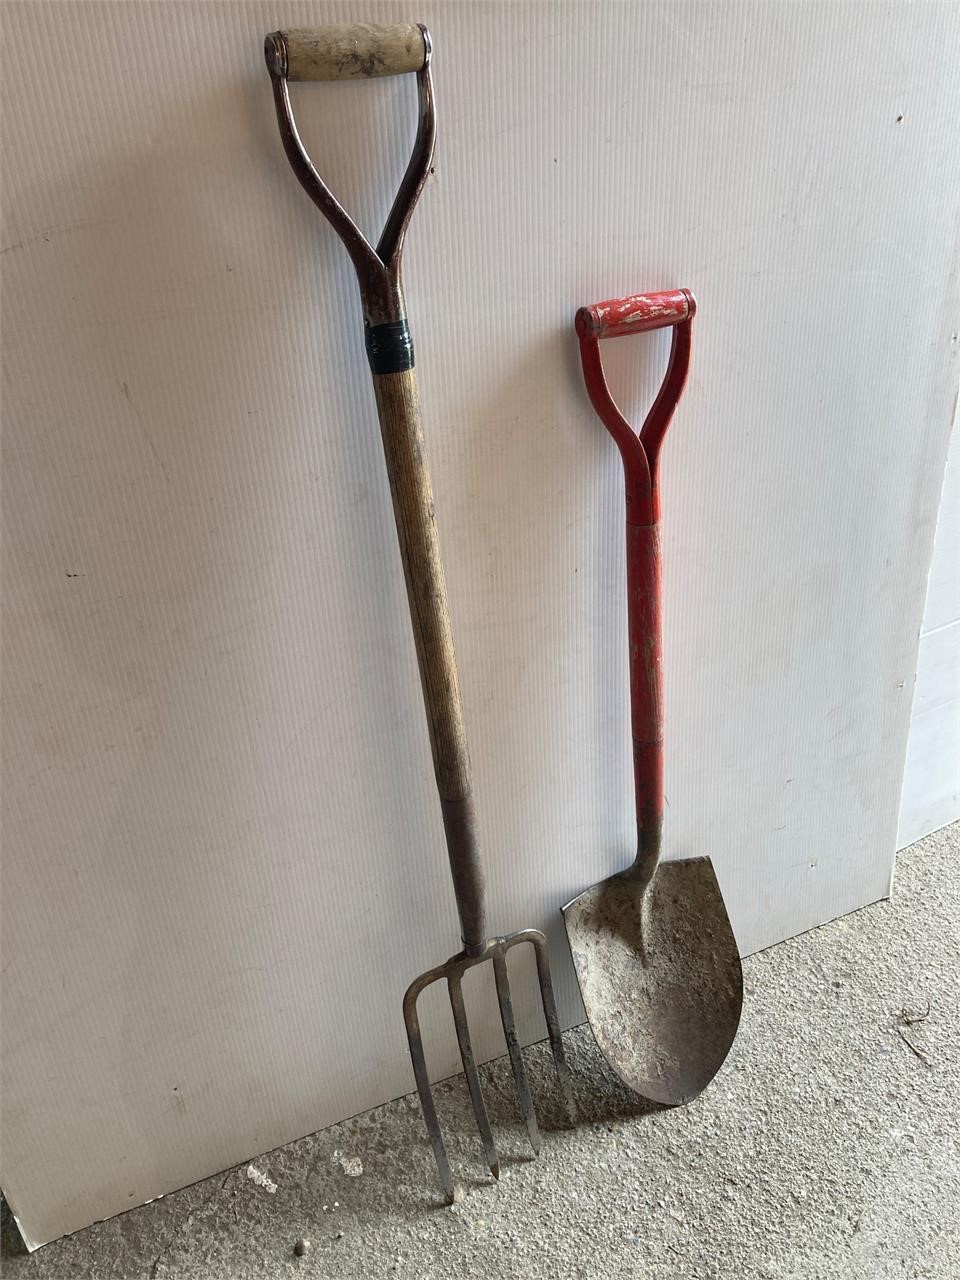 Potatoe fork and spade.